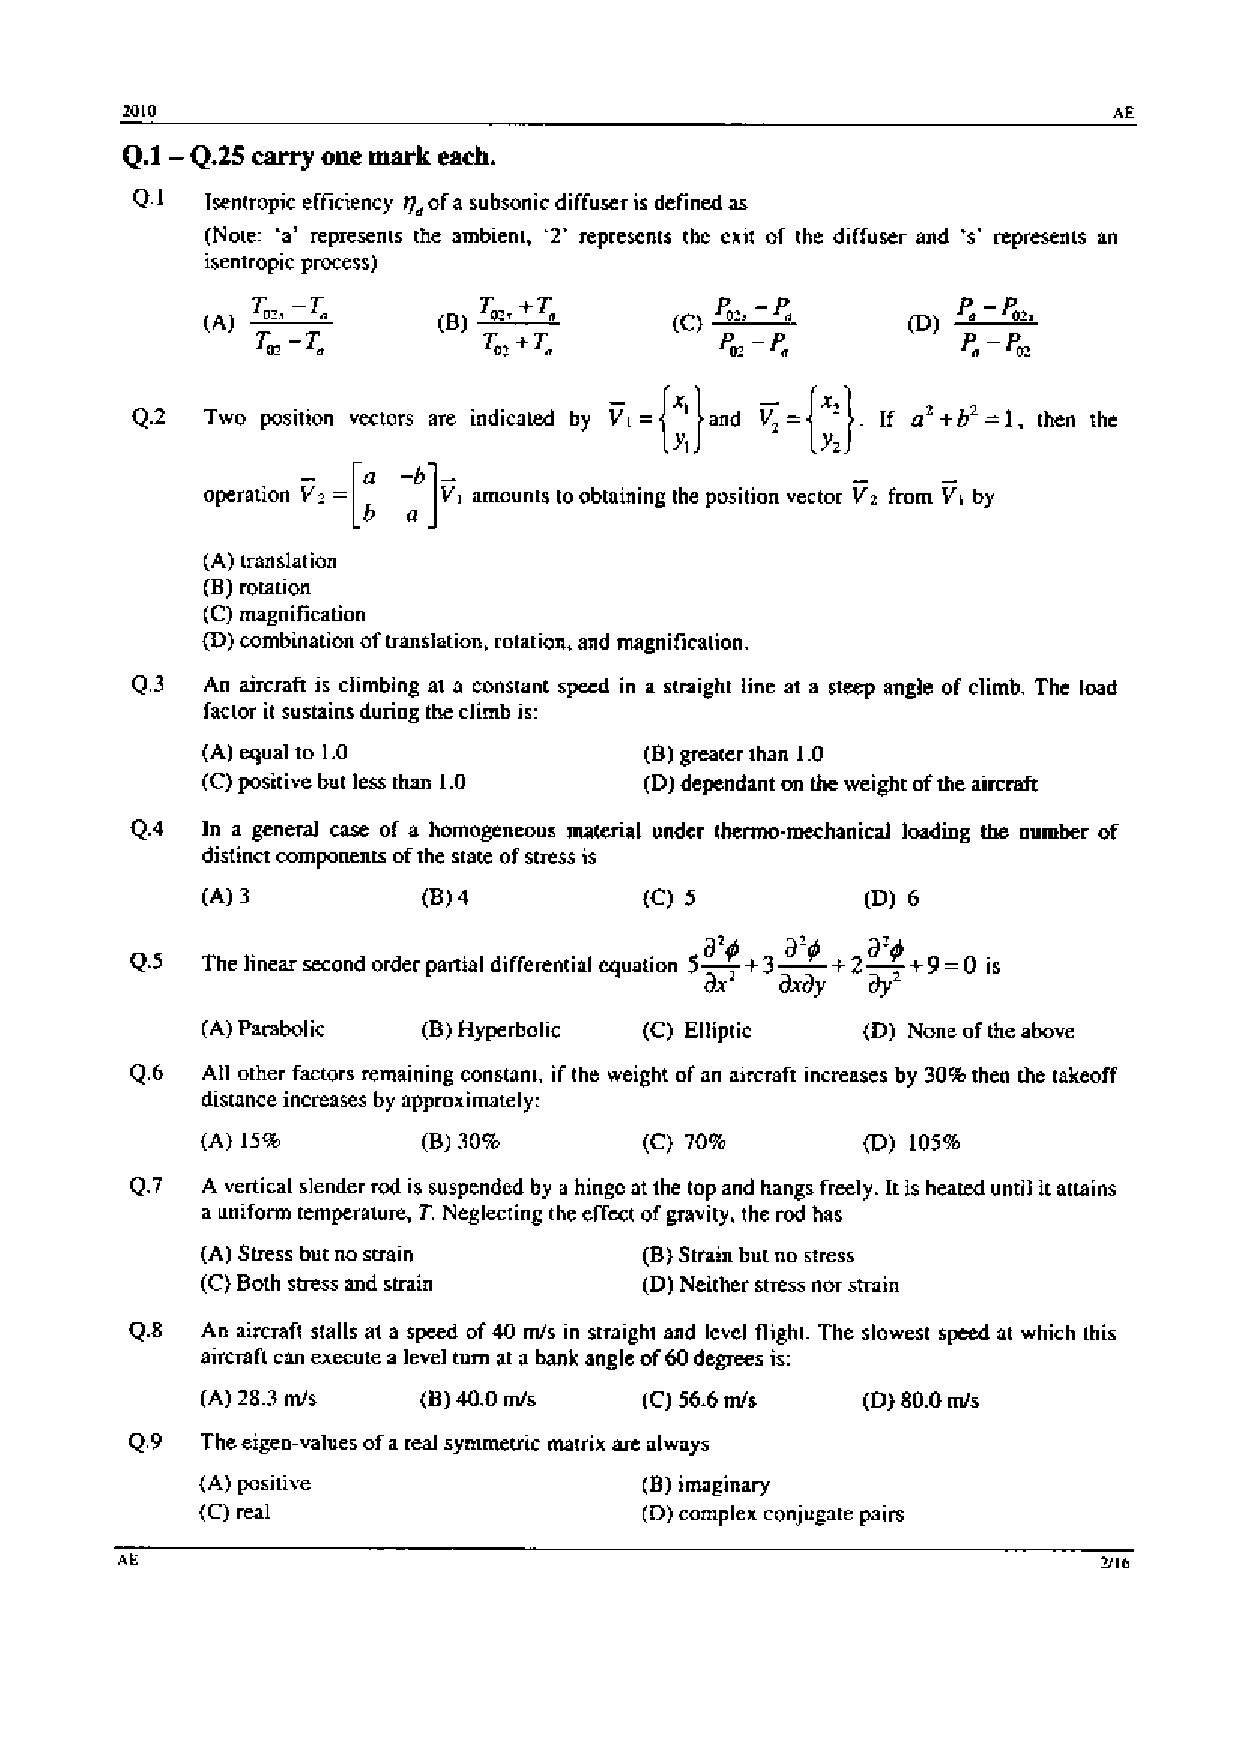 GATE Exam 2010 Aerospace Engineering Question Paper 2